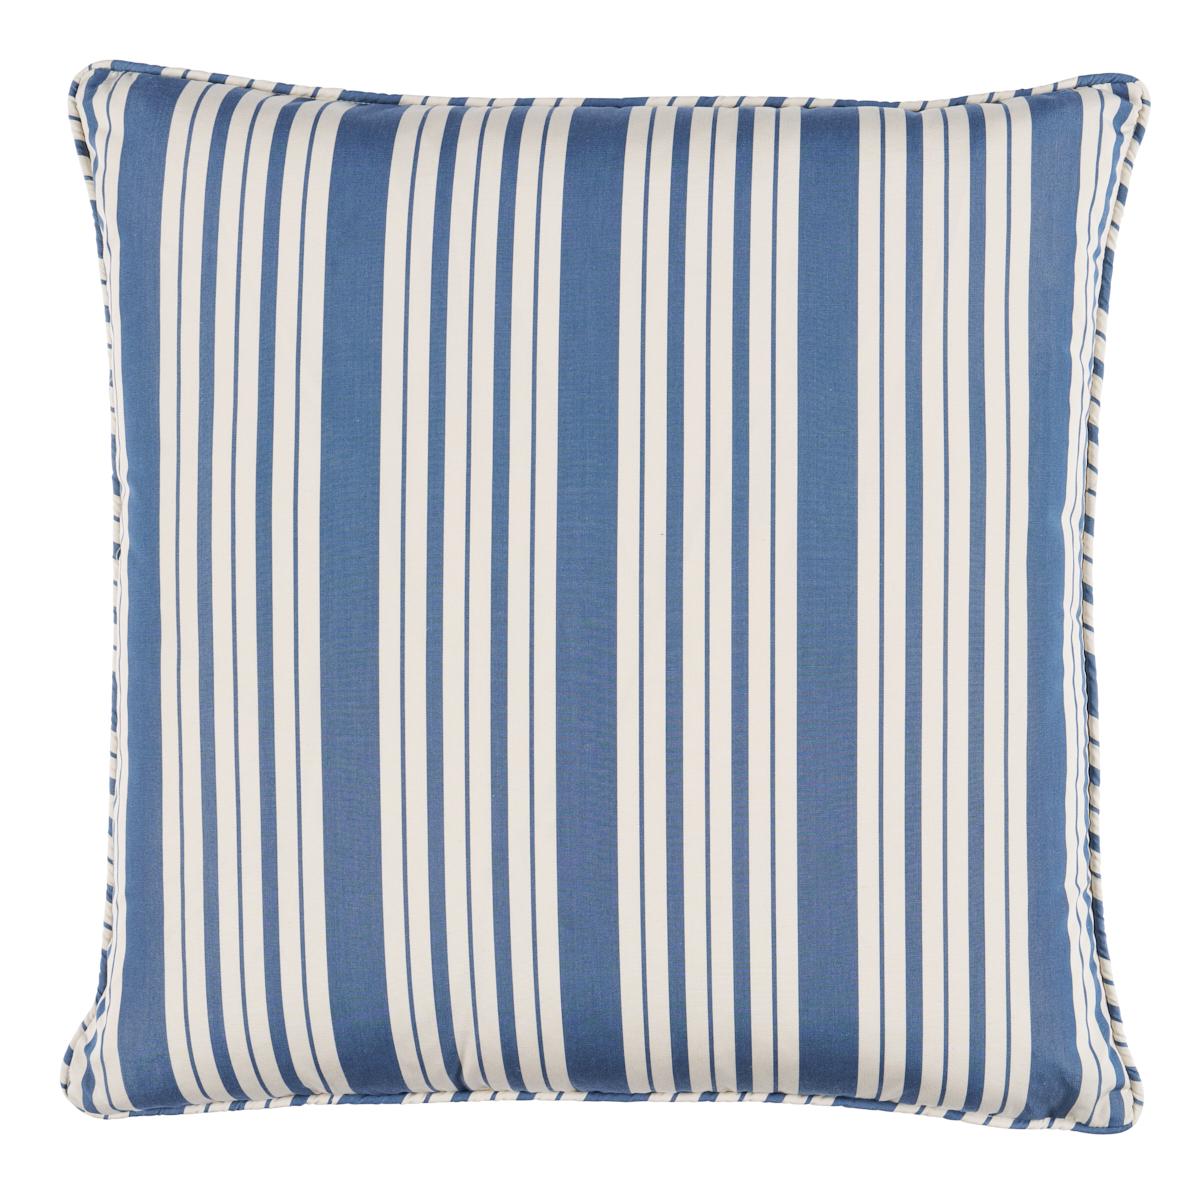 Markie Stripe Pillow in Indigo 18 x18" For Sale